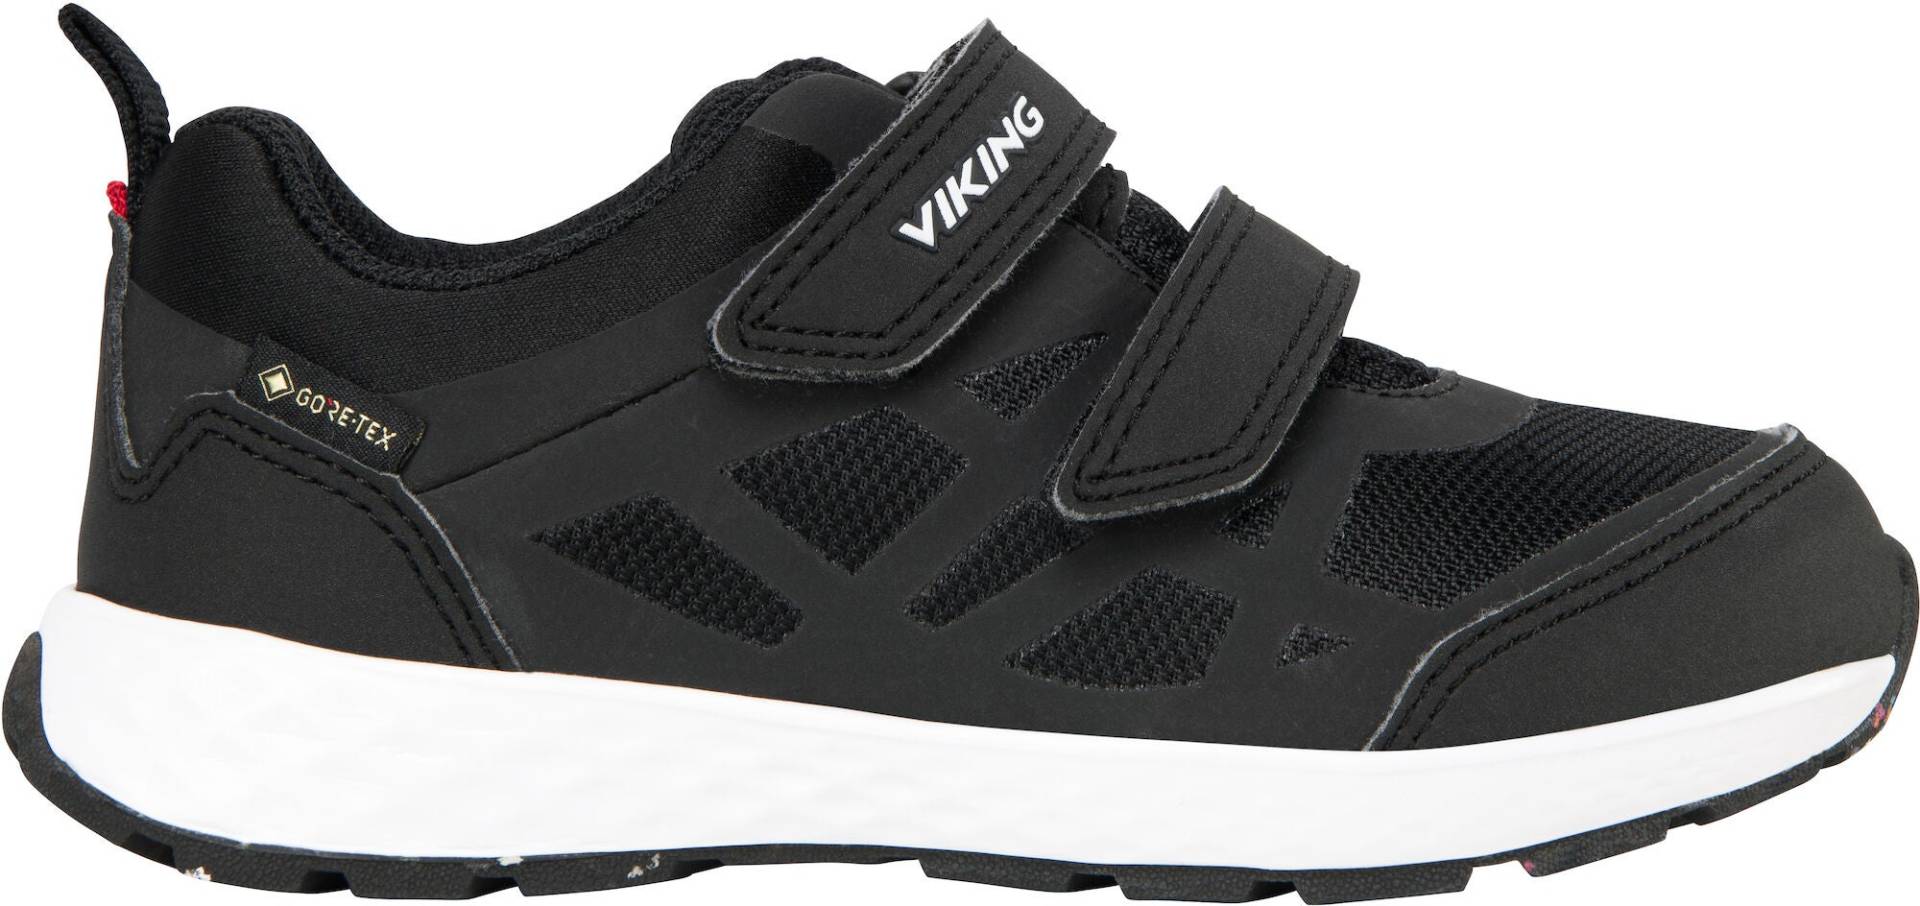 Viking Veme Reflex 2V GTX Kinder Sneakers, Black, 24, Kinderschuhe von Viking